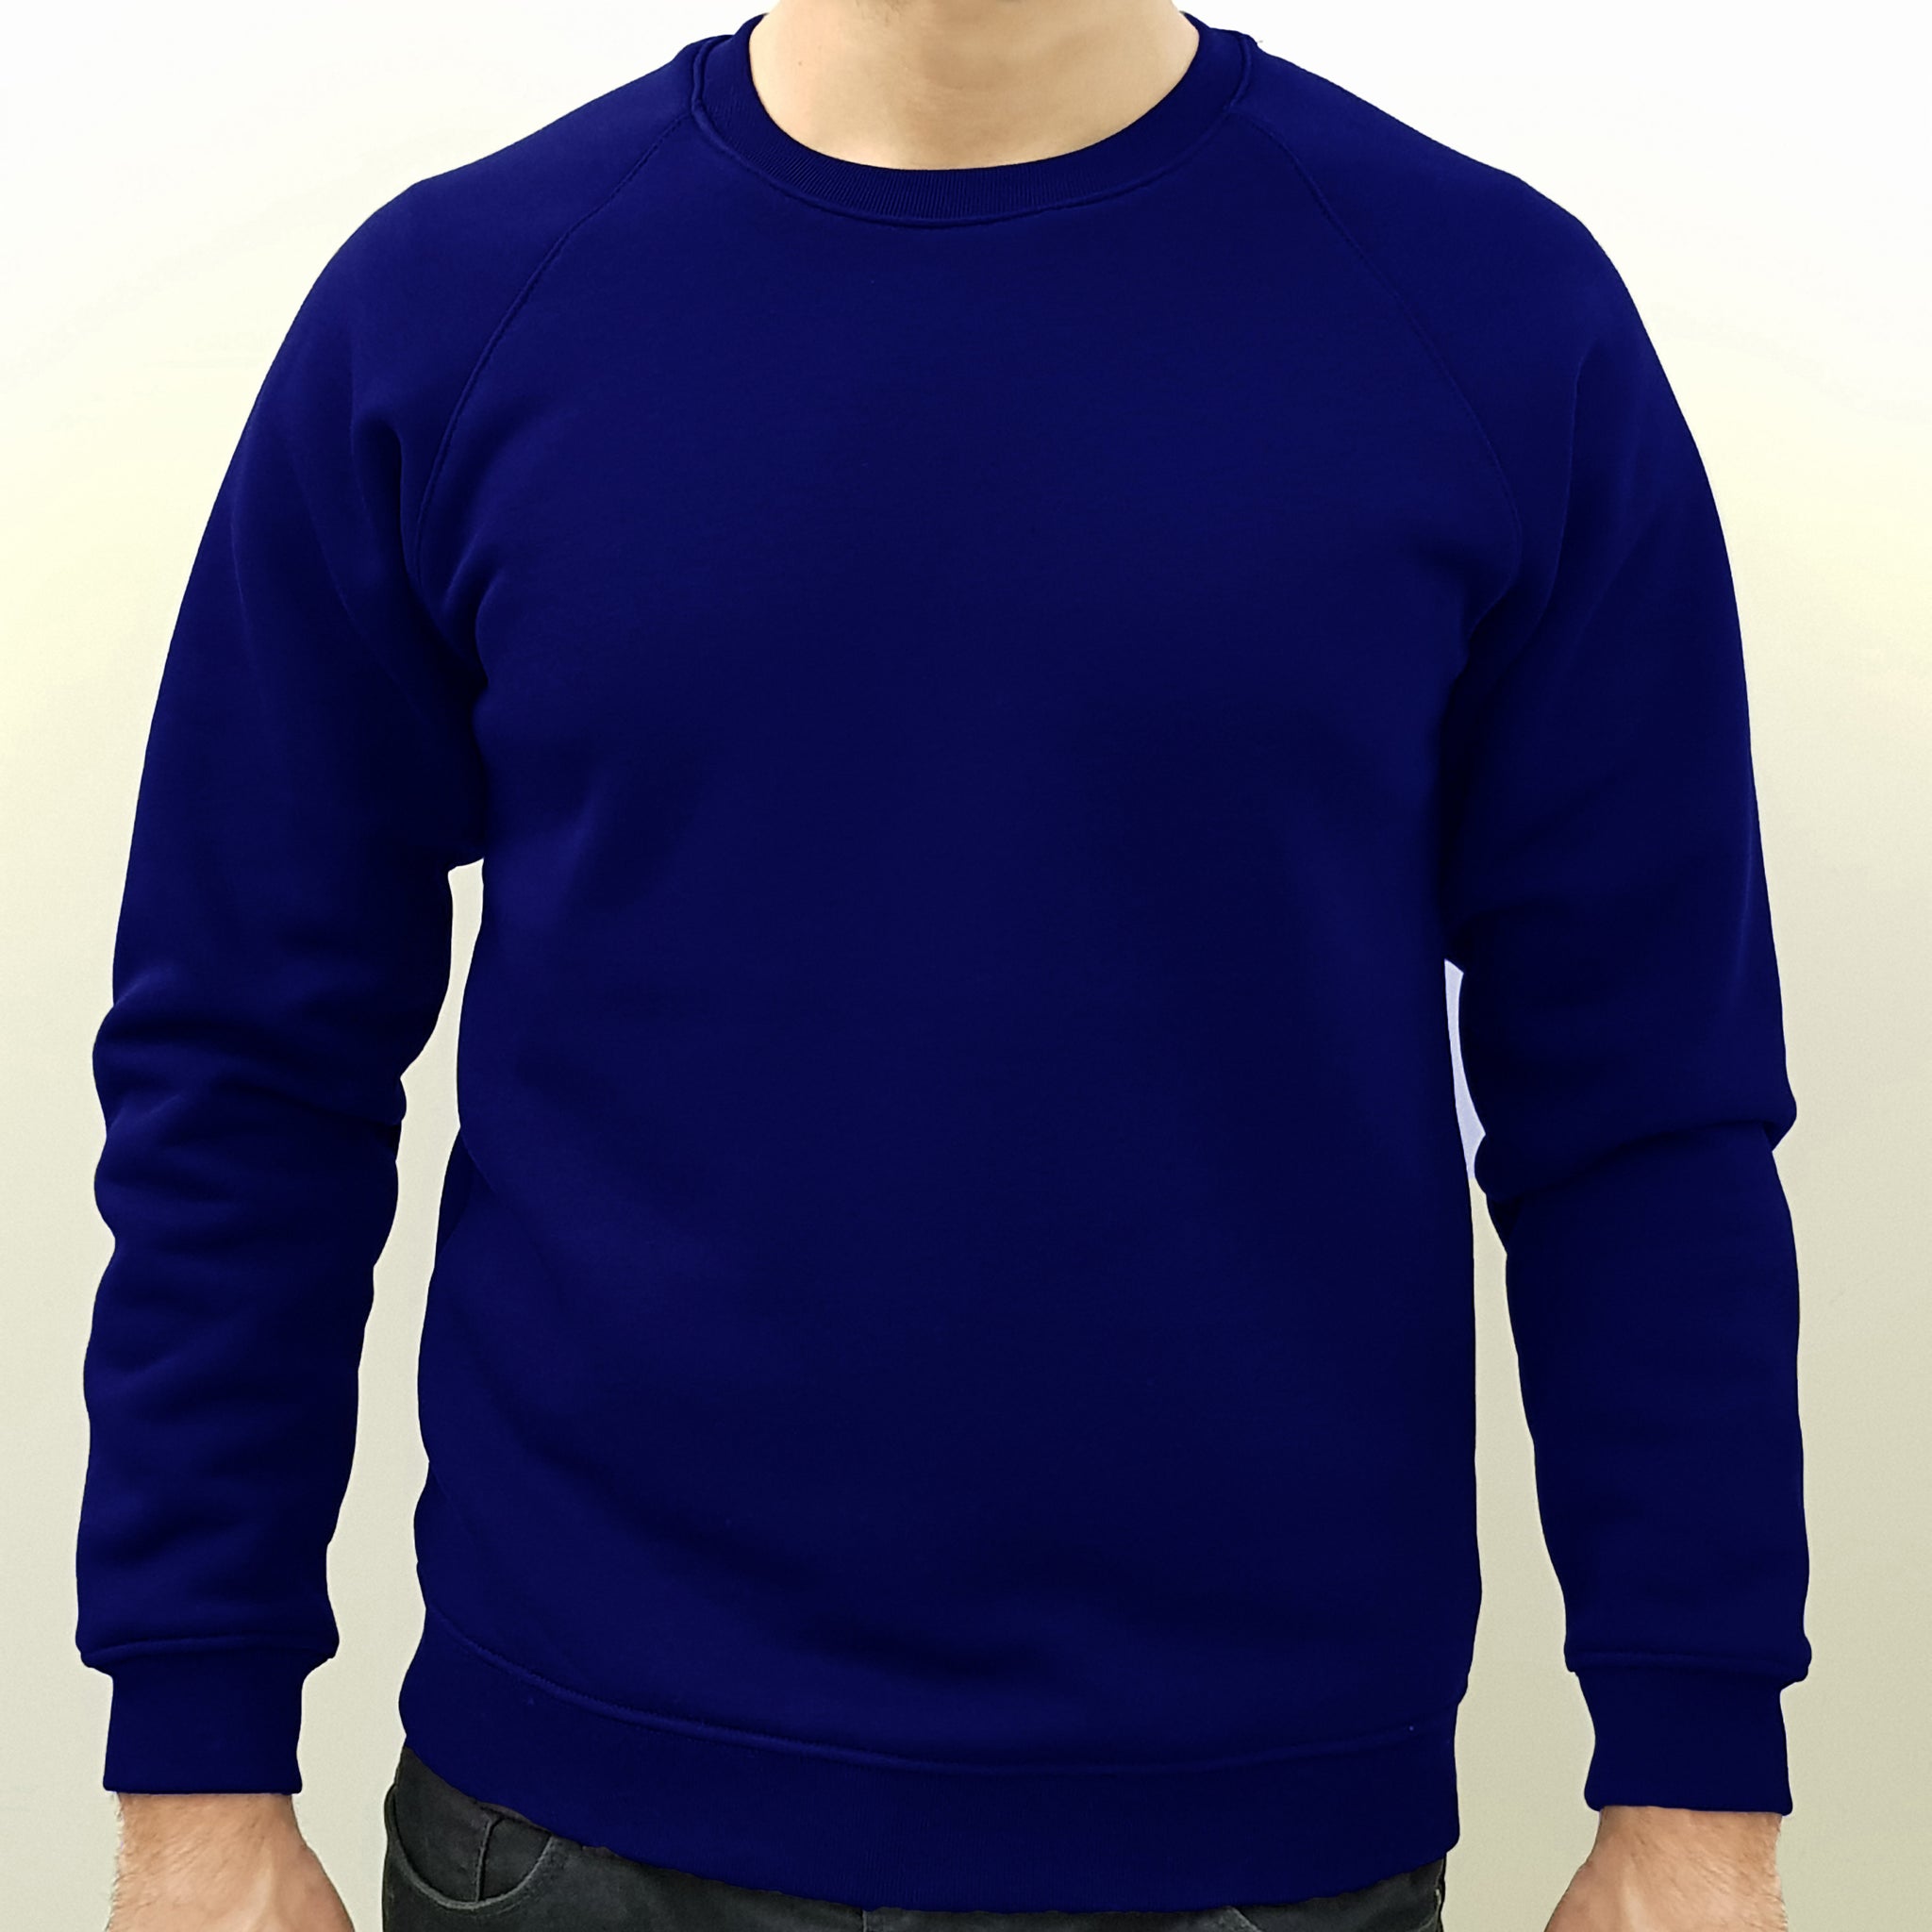 Long sleeve cotton fleece sweater